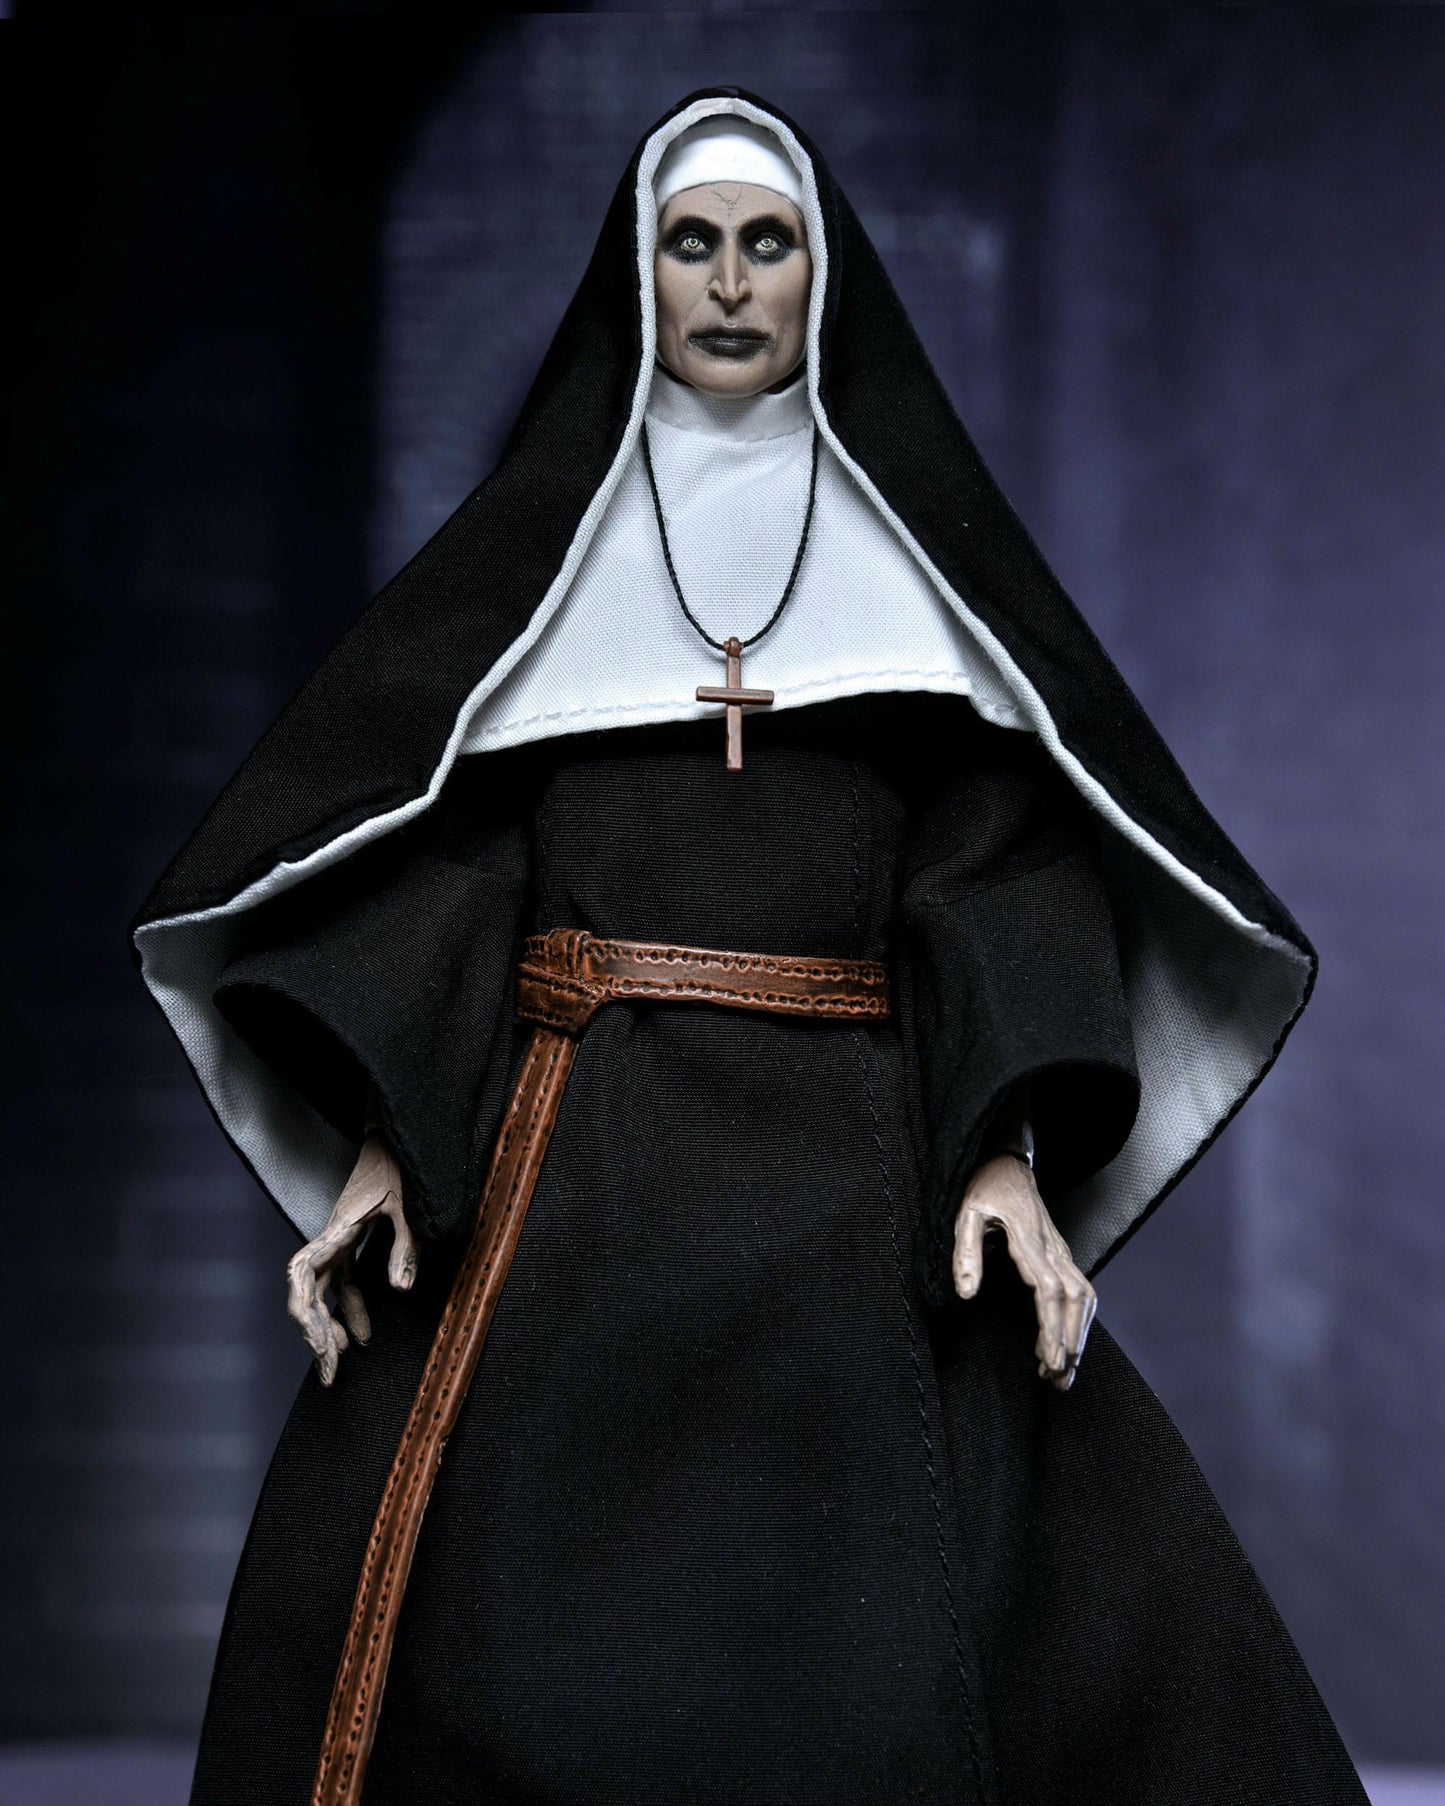 NECA The Conjuring Universe Figur Ultimate The Nun (Valak) 18cm NECA